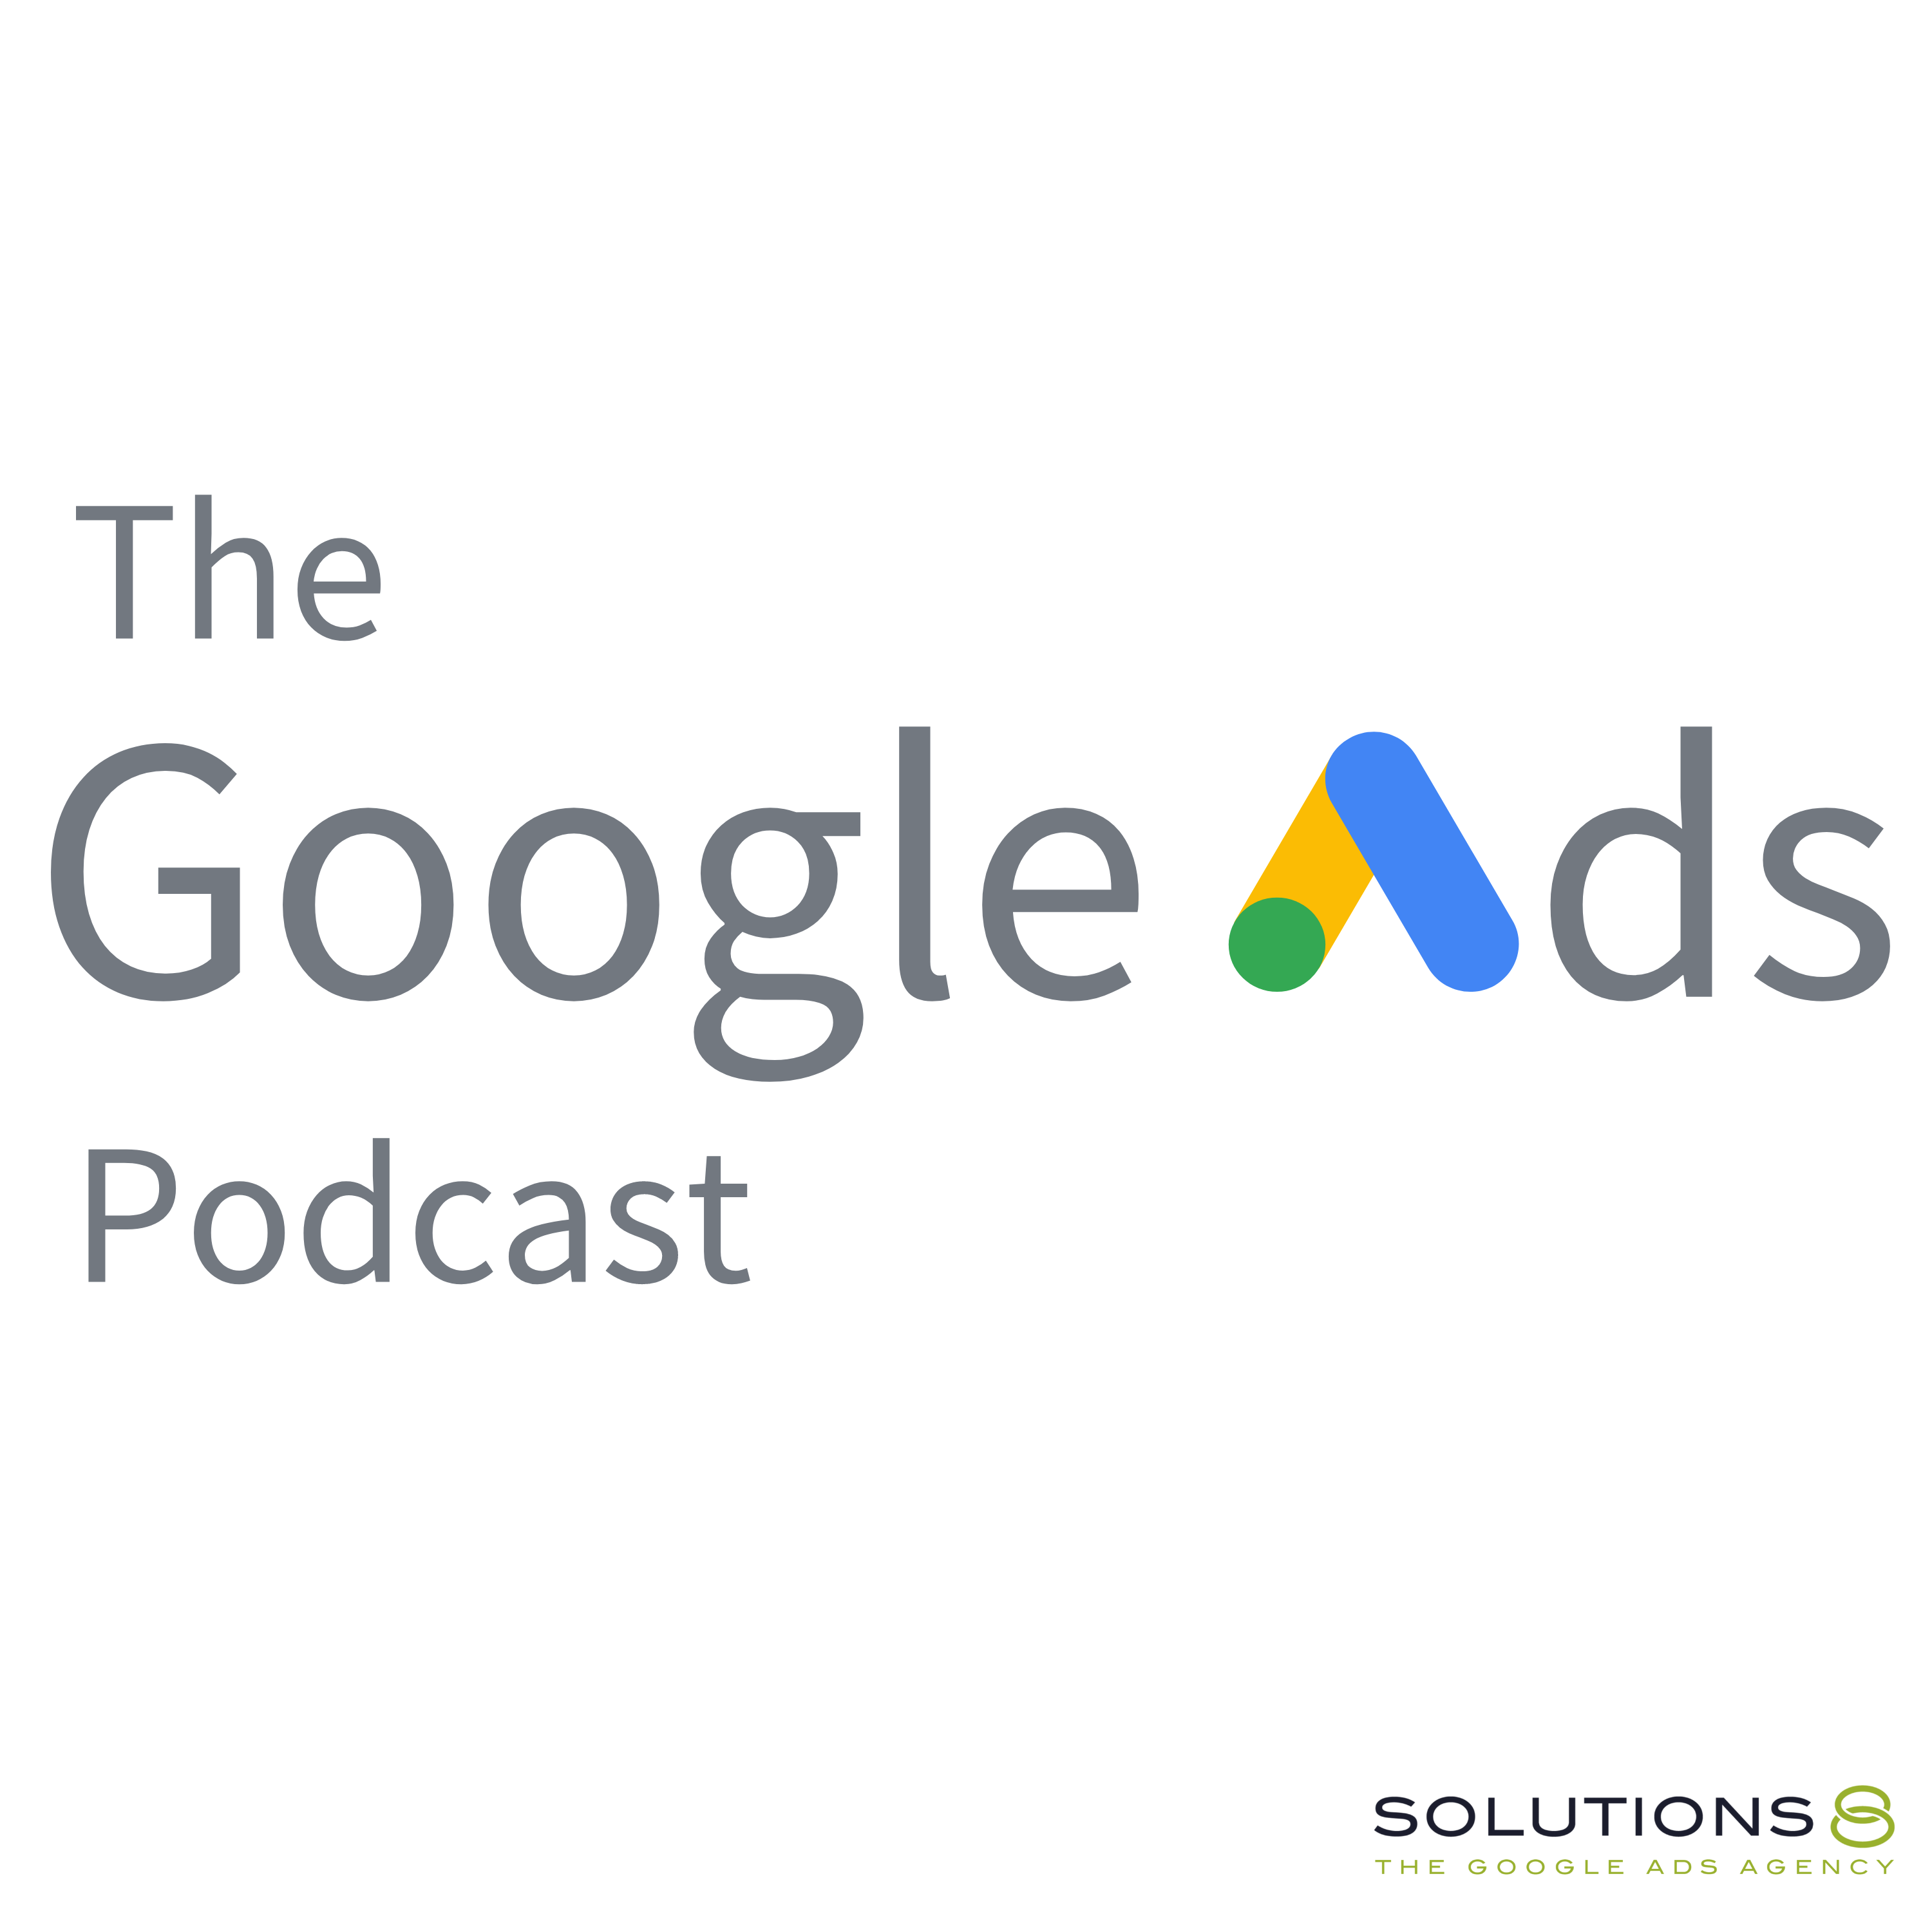 Artwork for podcast The Google Ads Podcast